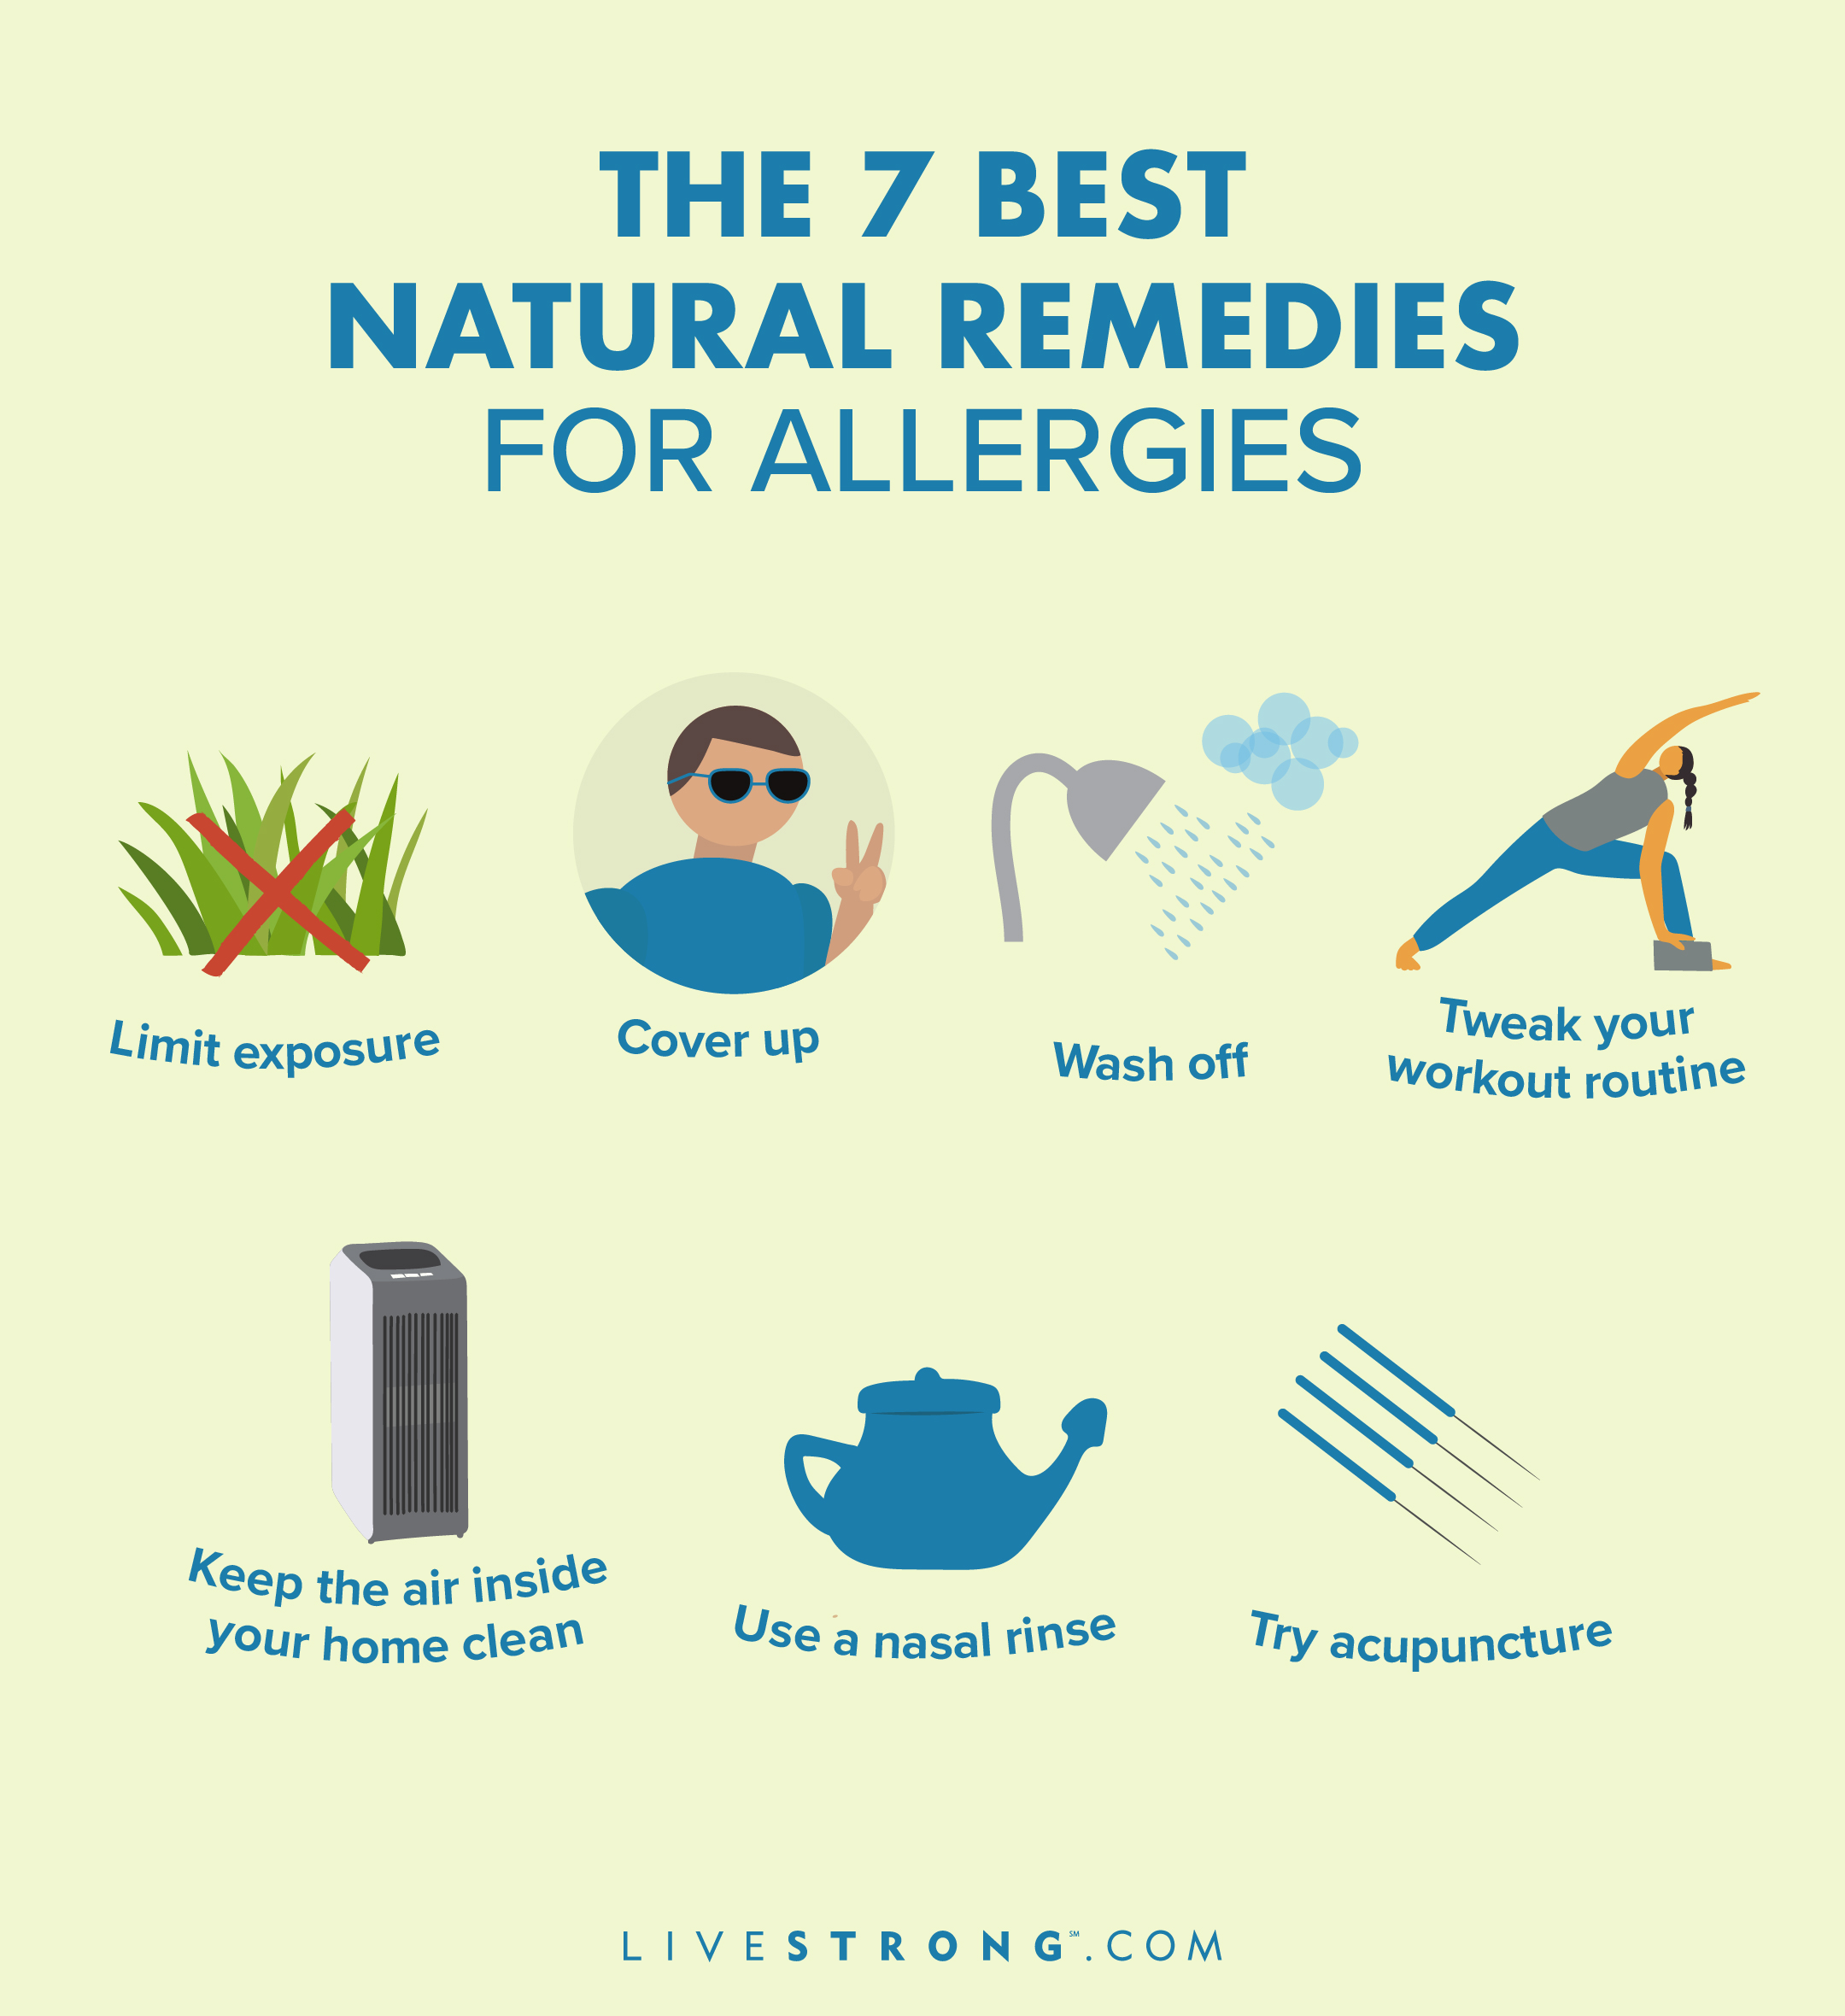 Allergy relief during allergy season